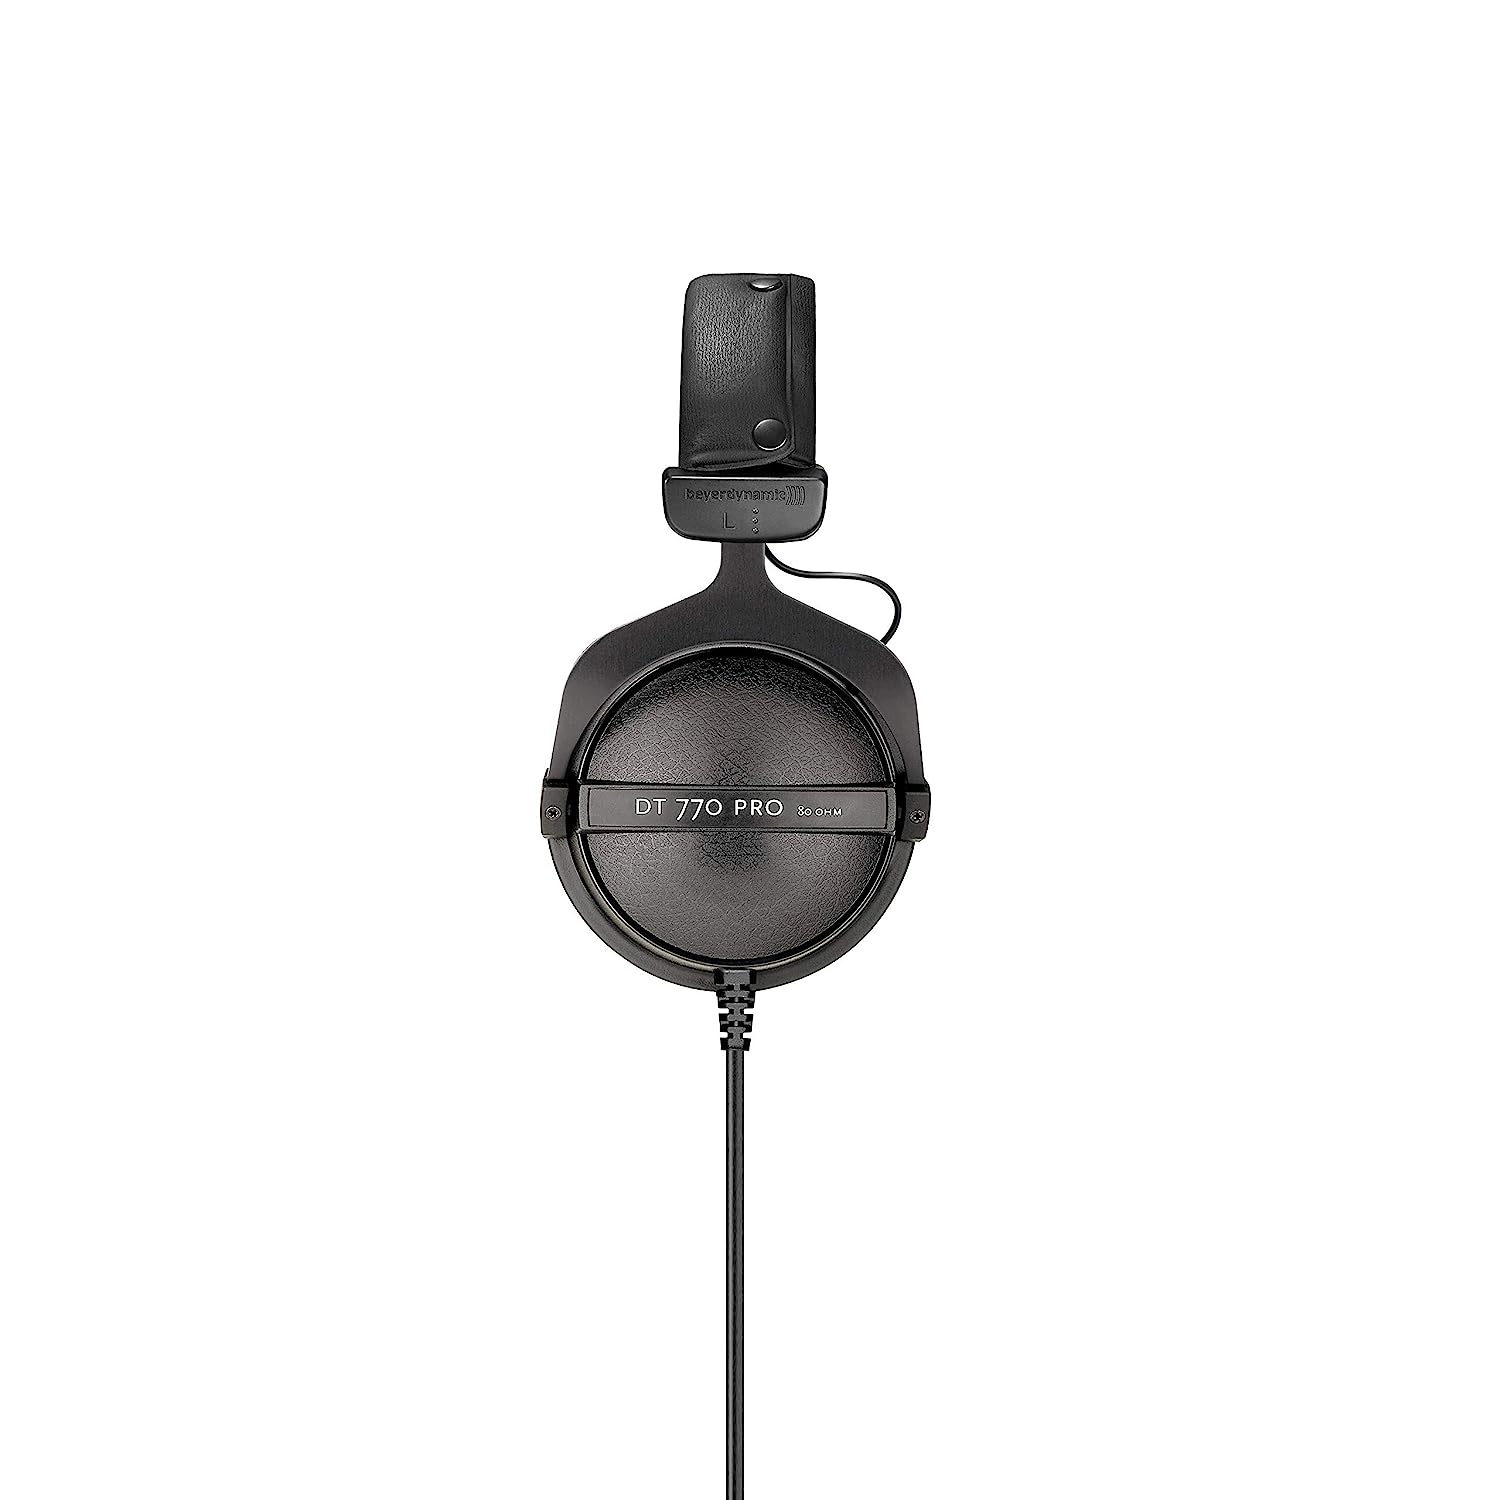 Beyerdynamic DT 770 PRO 80 Ohm Studio Headphone - Wire Straps - USB Card Reader - Headphone Cleaner 4oz Base Bundle